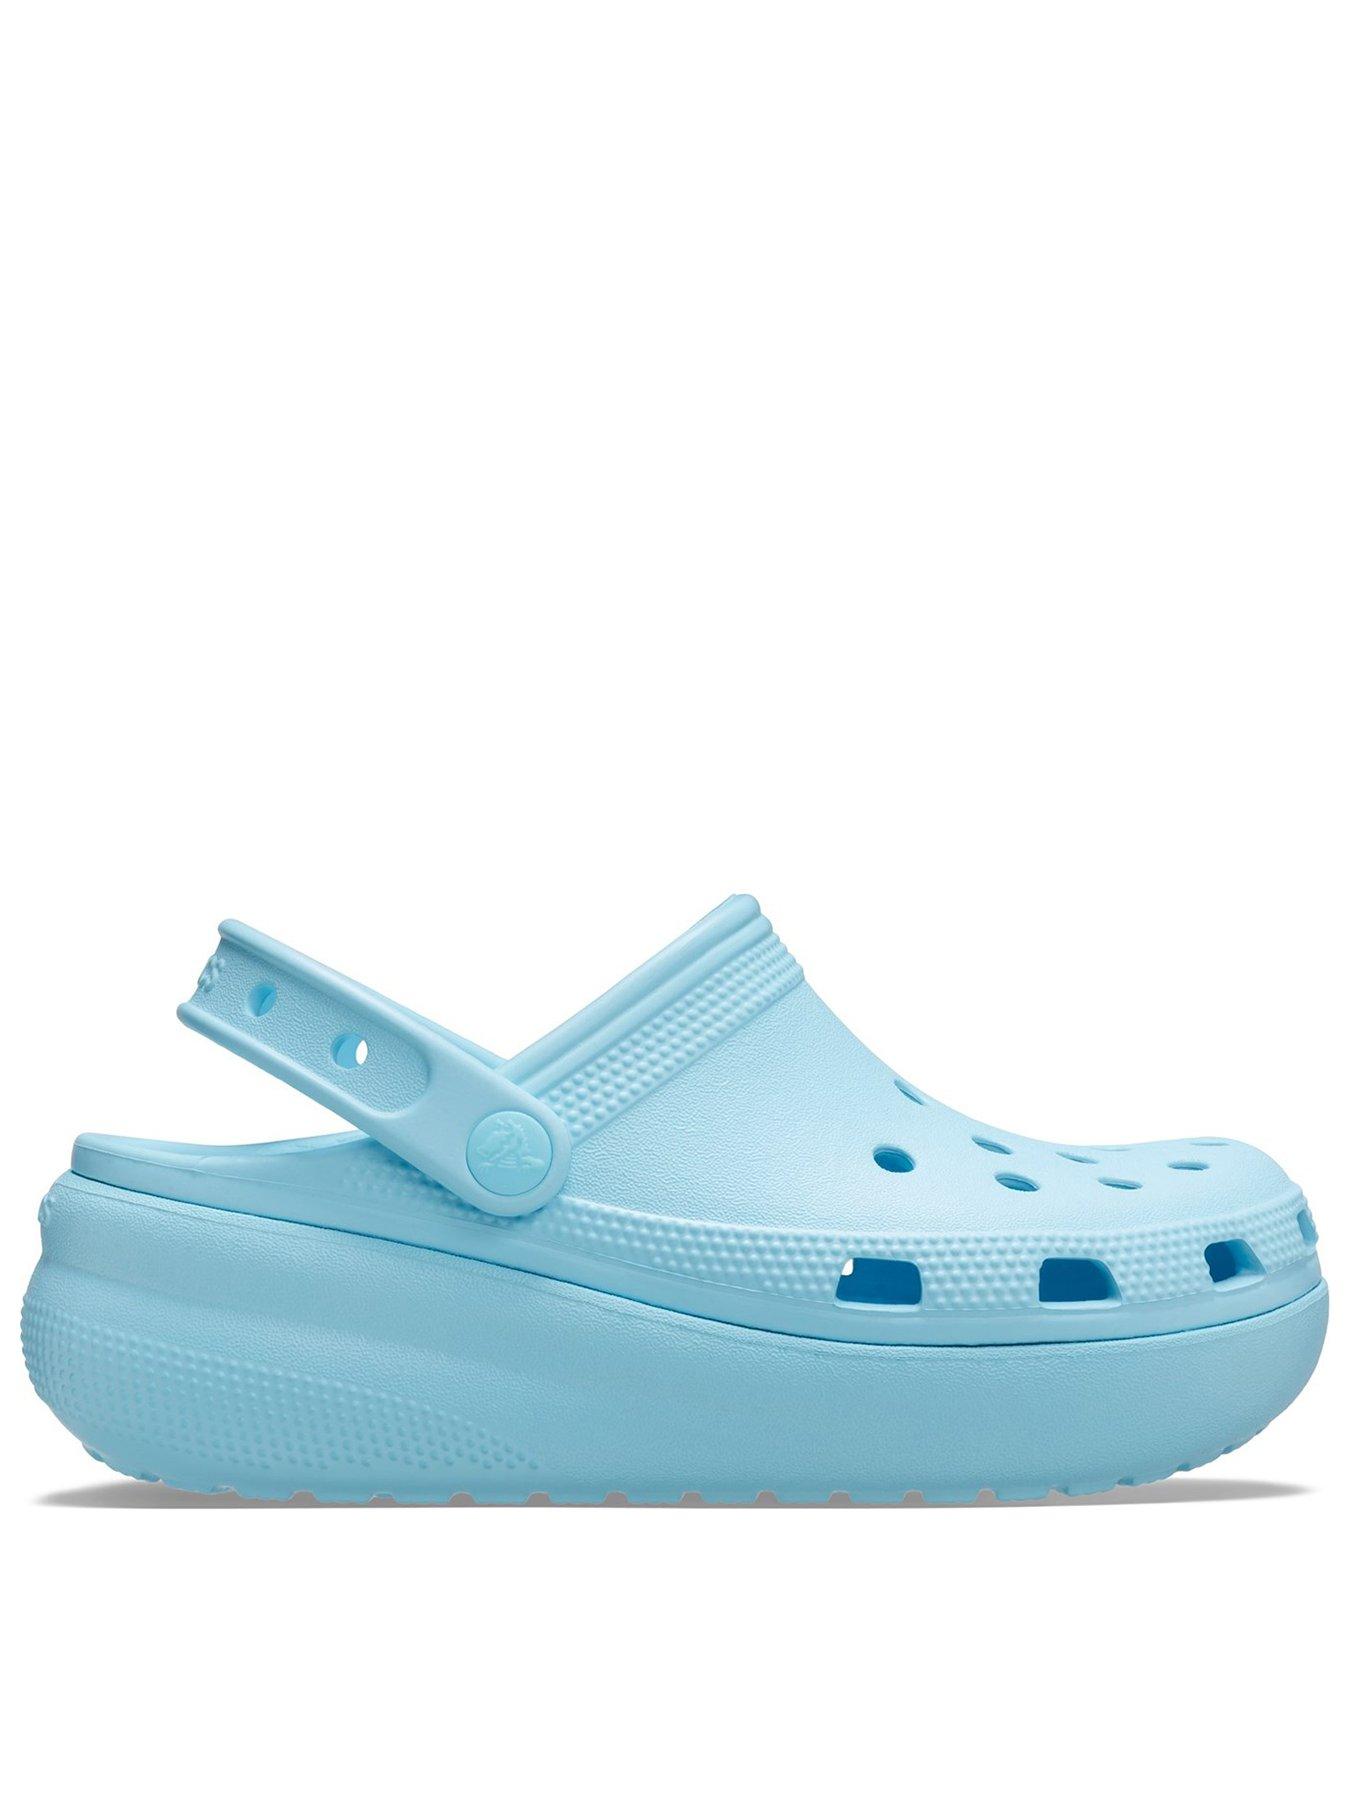 Buy Crocs Online | Platform Clogs | Crocs Shoes | Very Ireland